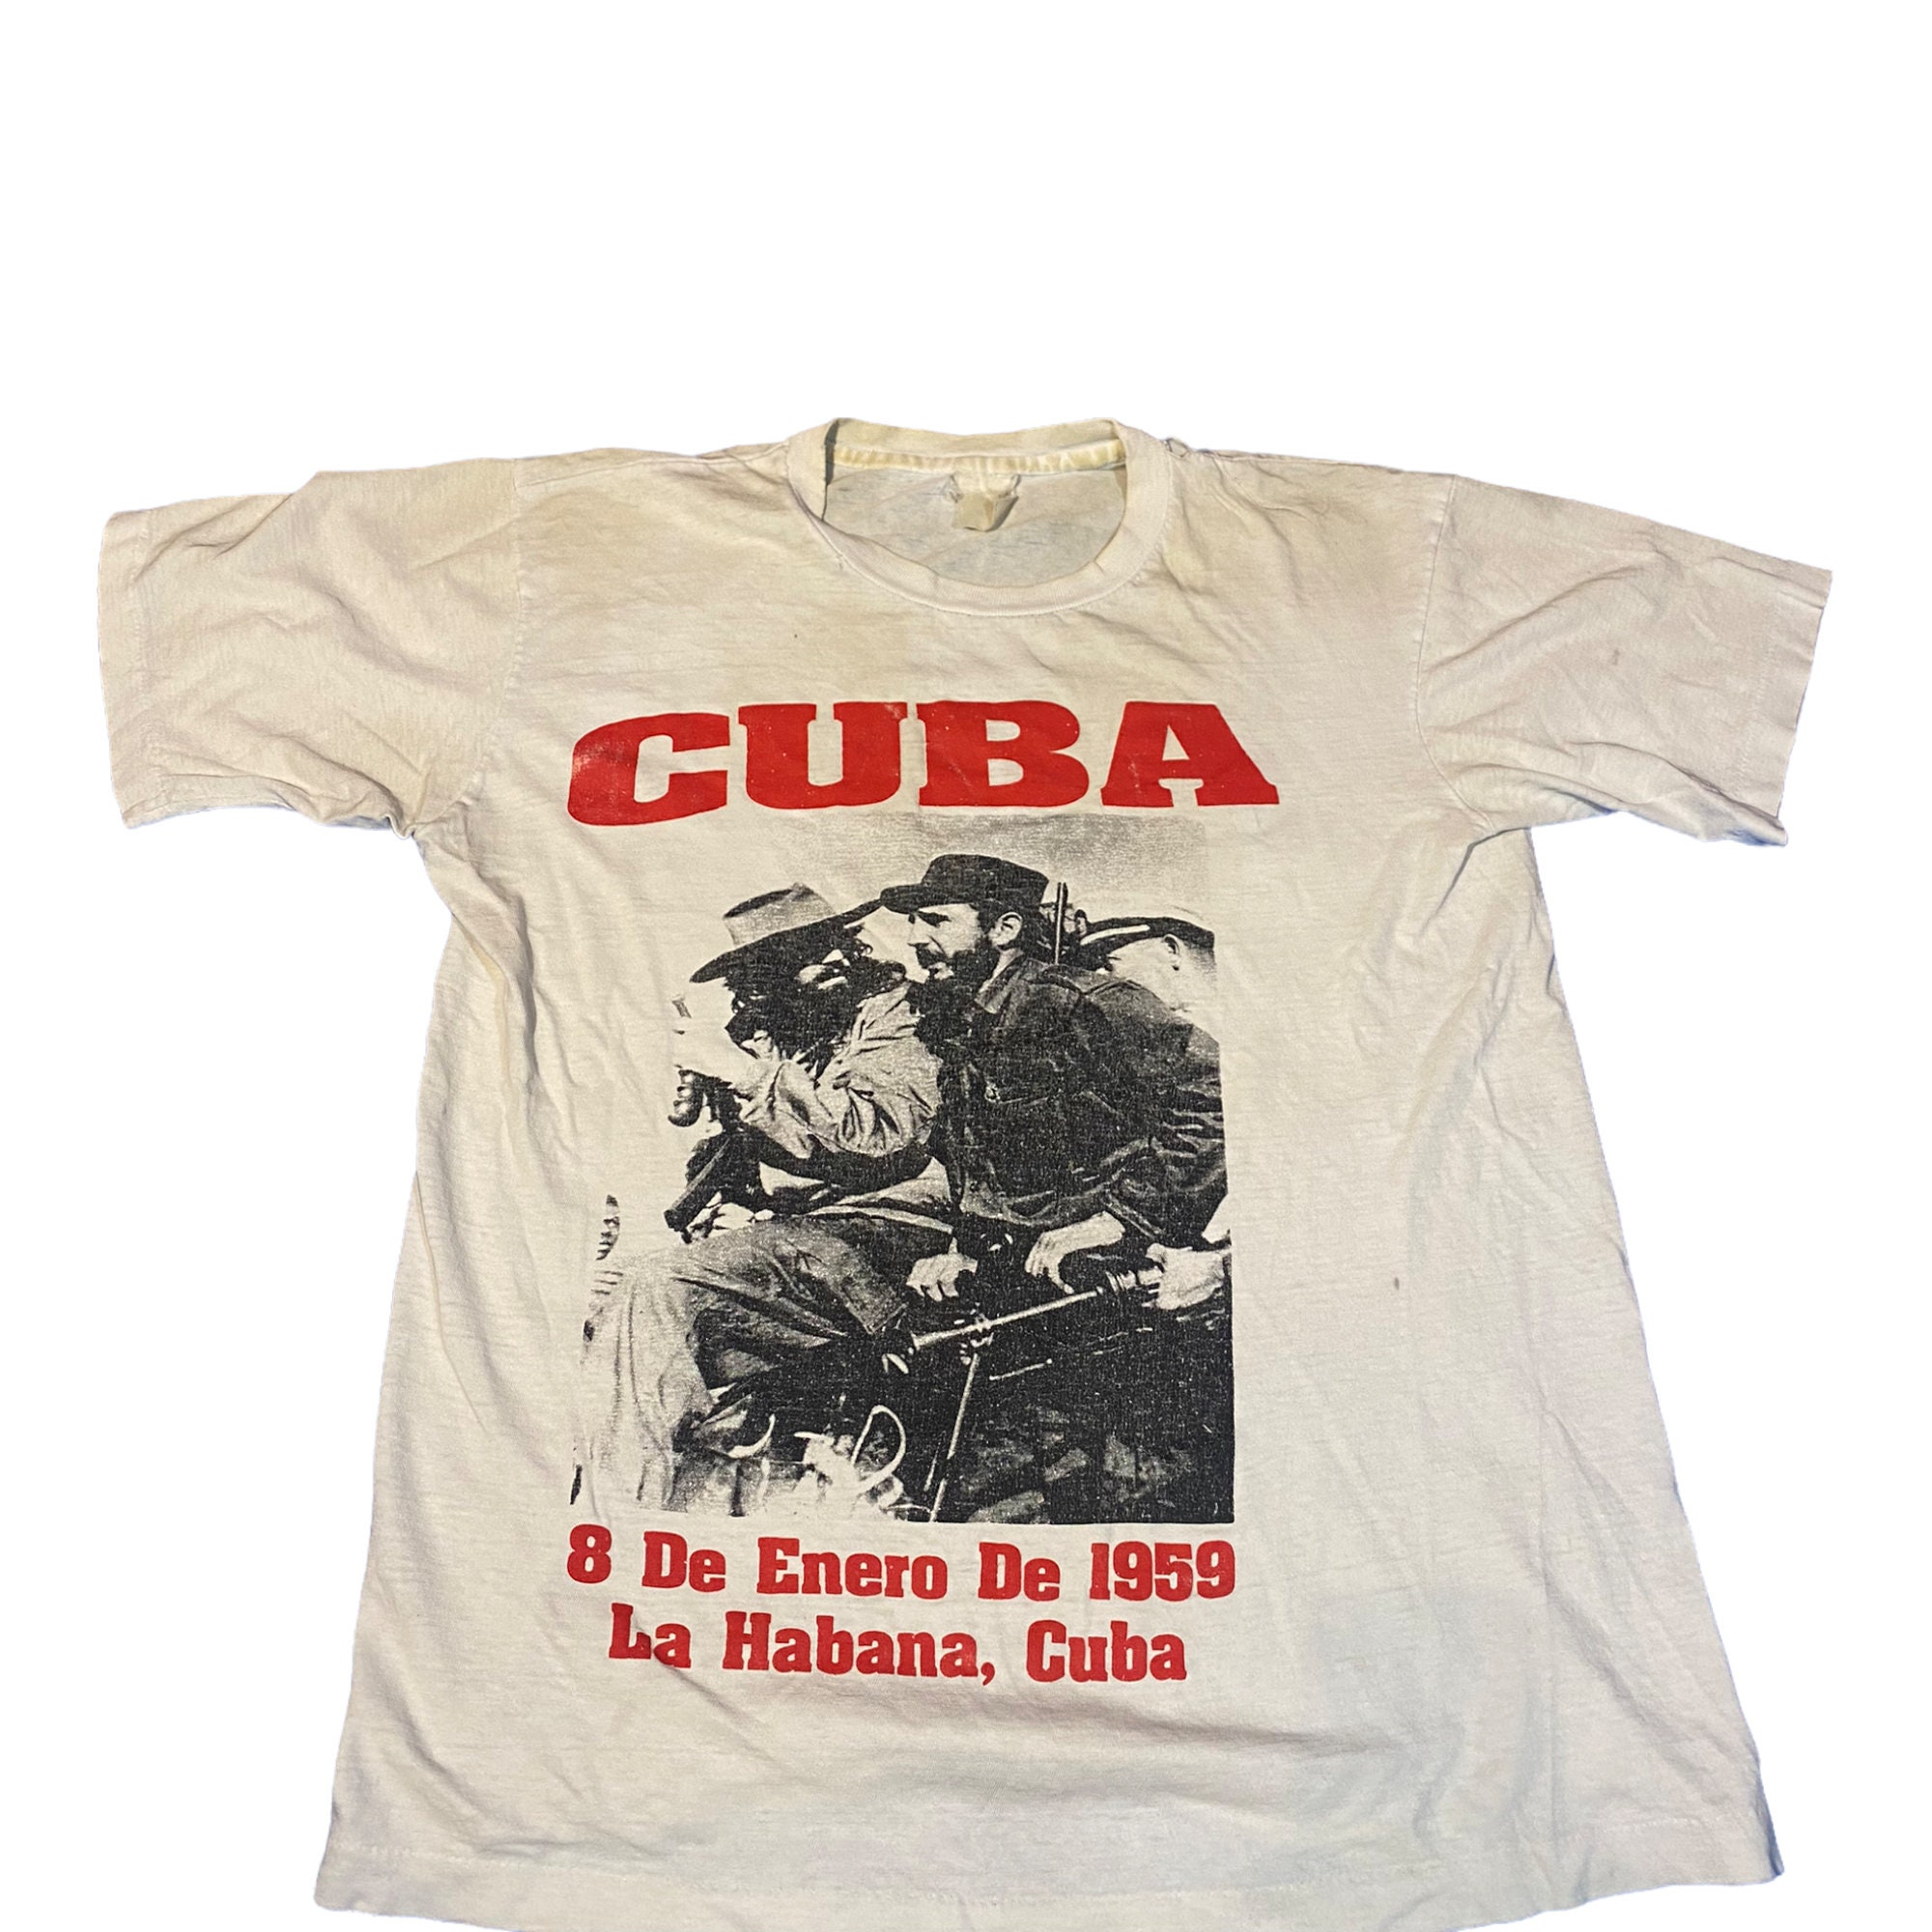 TumbleweedsATTiTUDE Che Guevara Shirt, Red T-Shirt, Graphic Shirt, Party Shirt, Hero Shirt, Festival Shirt, Iconic Shirt, Unisex, Size M/L